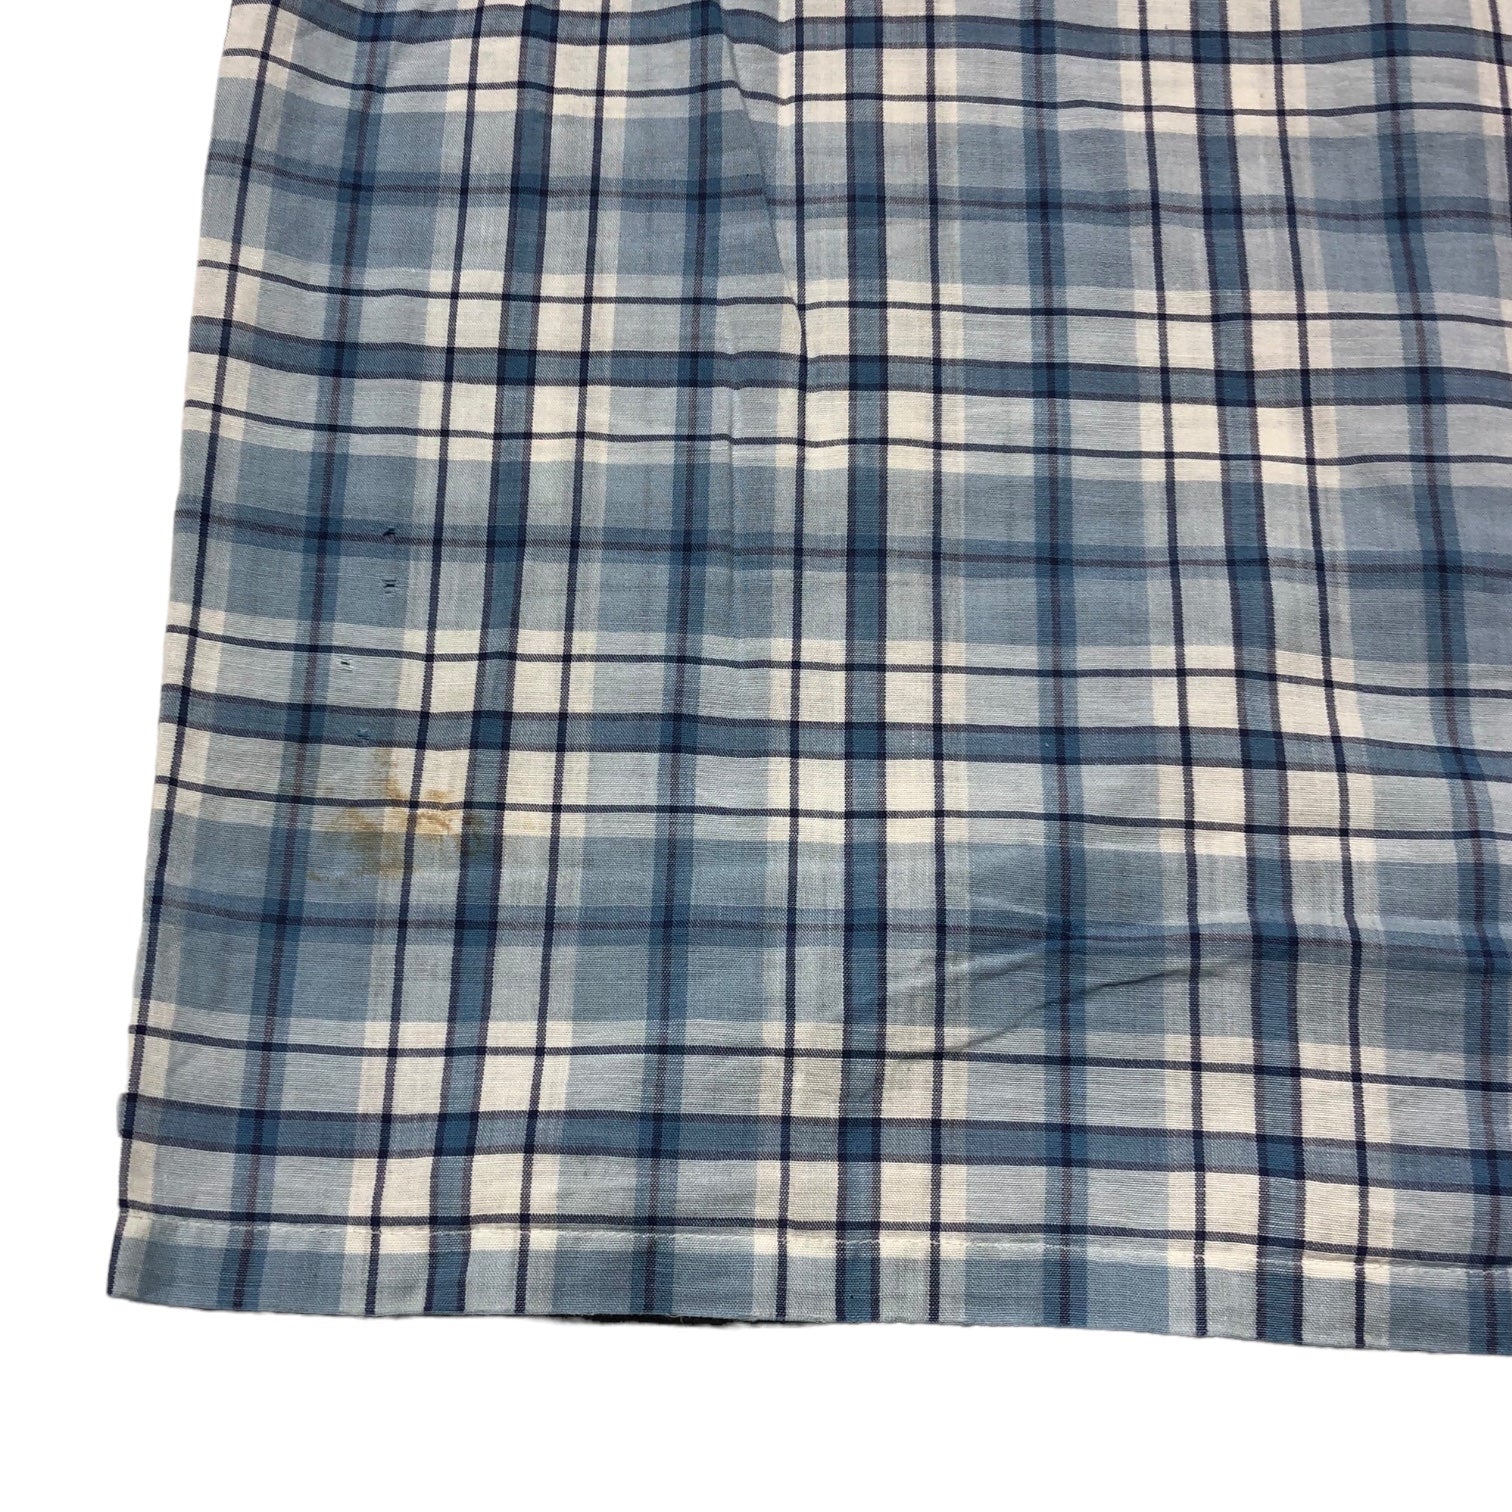 TOWNCRAFT(タウンクラフト) 60's vintage open collar shirt ヴィンテージ オープンカラー シャツ 半袖 チェック S ブルー PENNY'S　船タグ